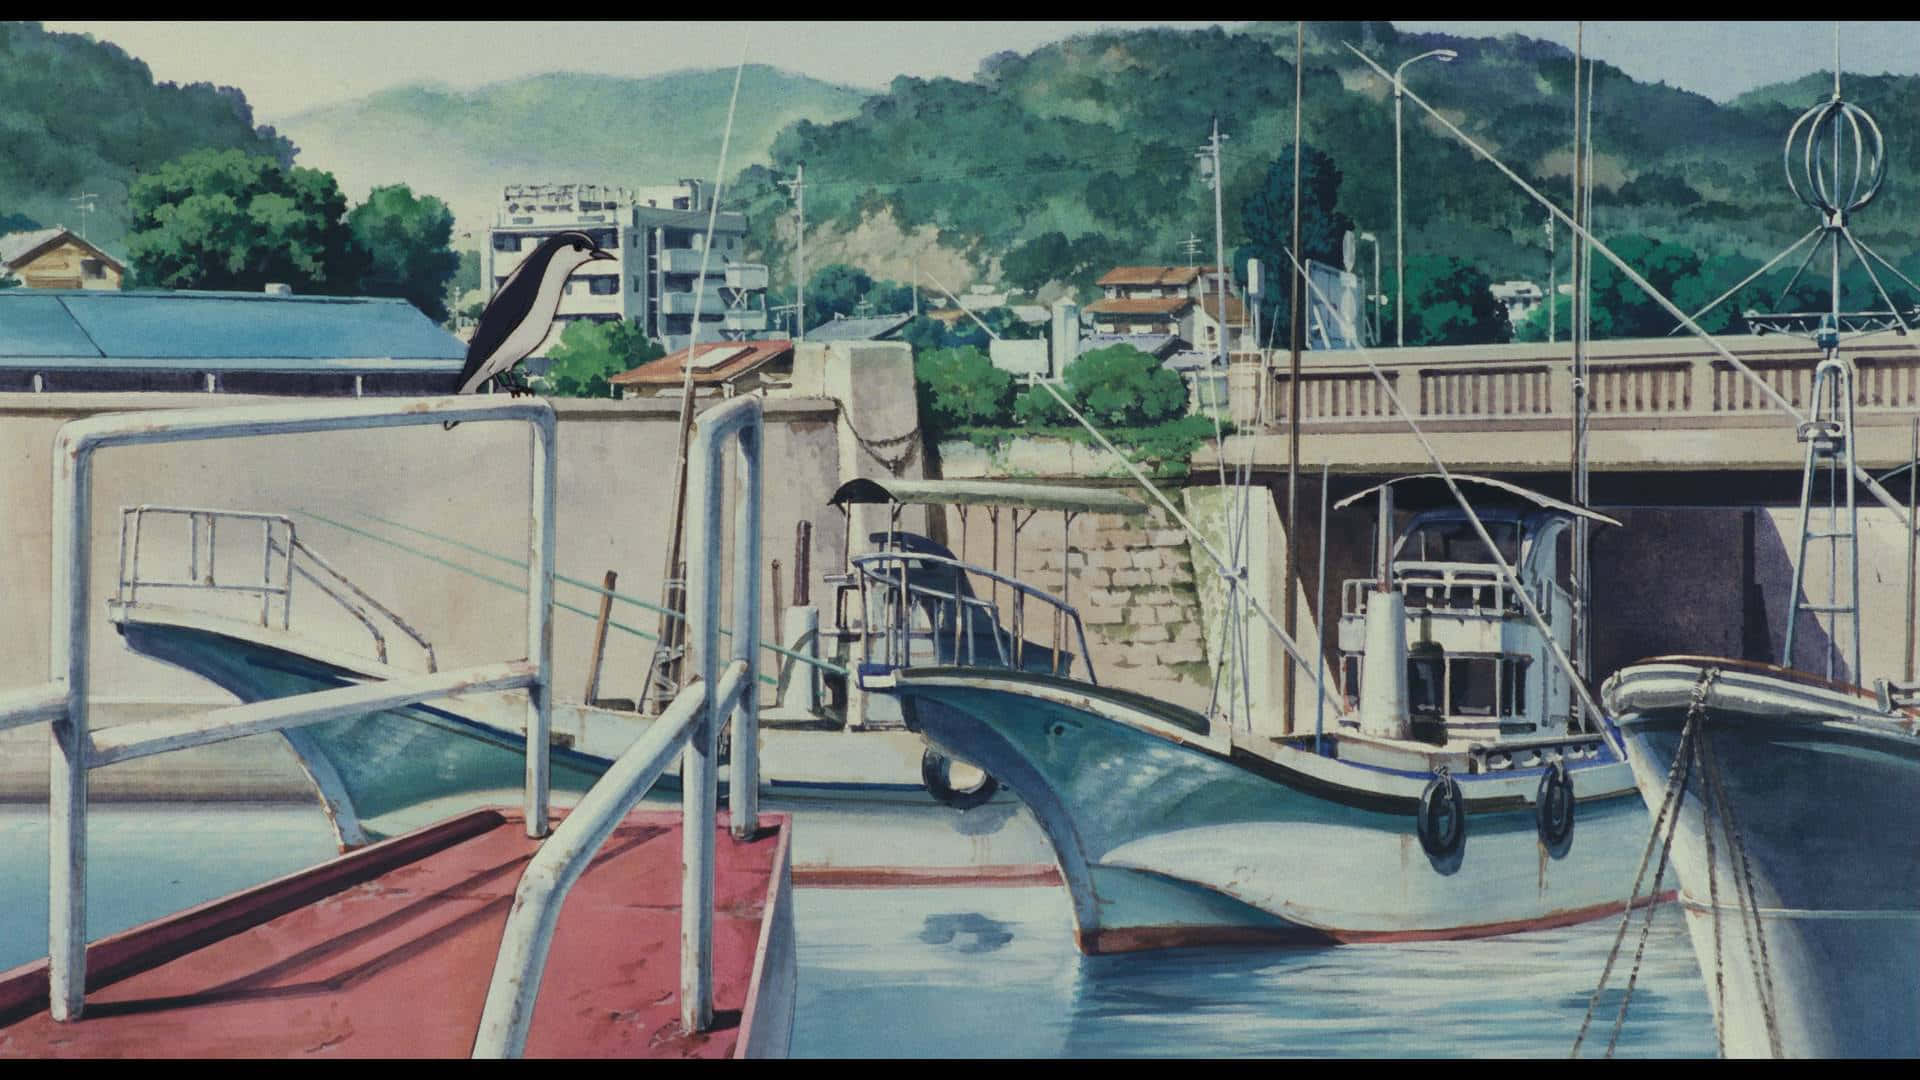 Studio Ghibli's Ocean Waves beautiful seaside scene with high school friends Wallpaper